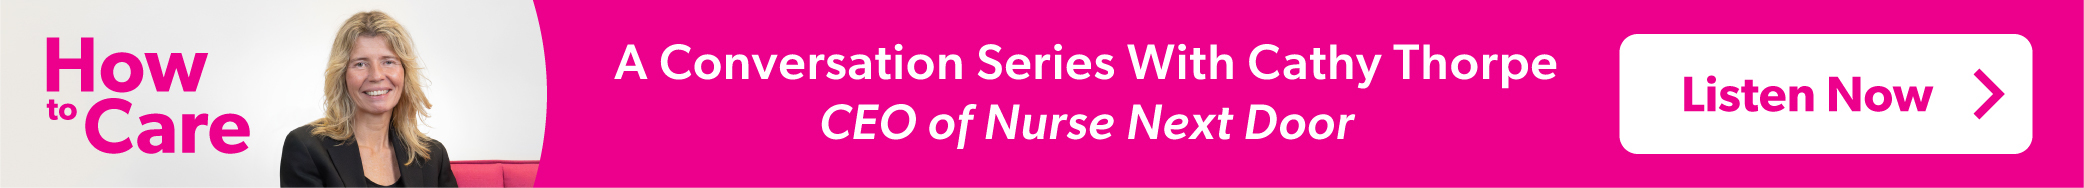 A conversation series with Cathy Thorpe CEO of Nurse Next Door